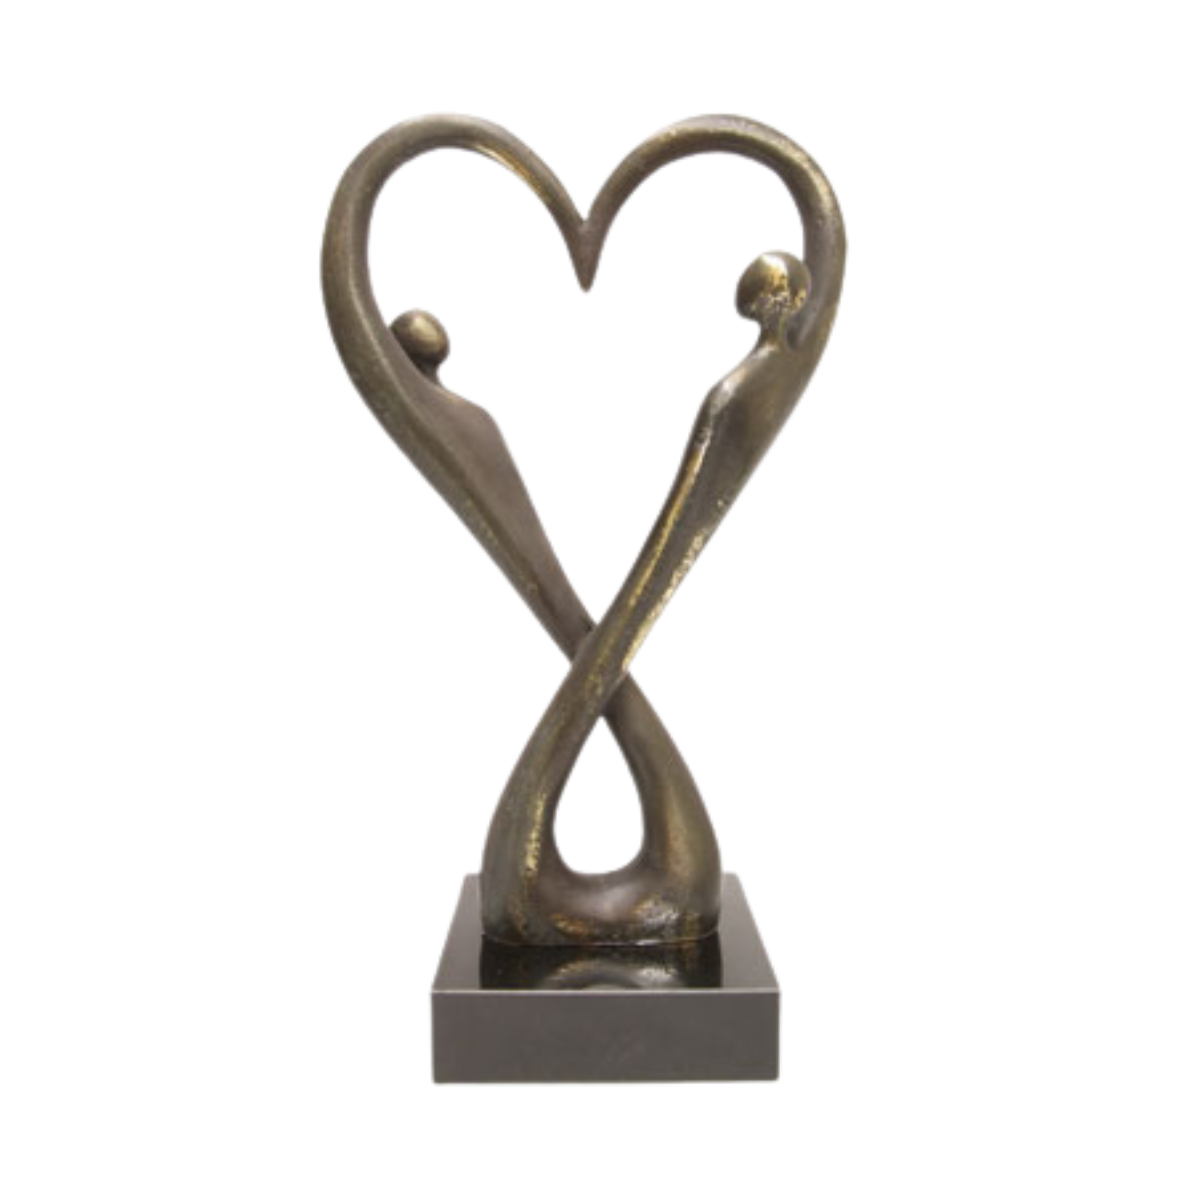 Mark Jurriens - With love | Sculptuur